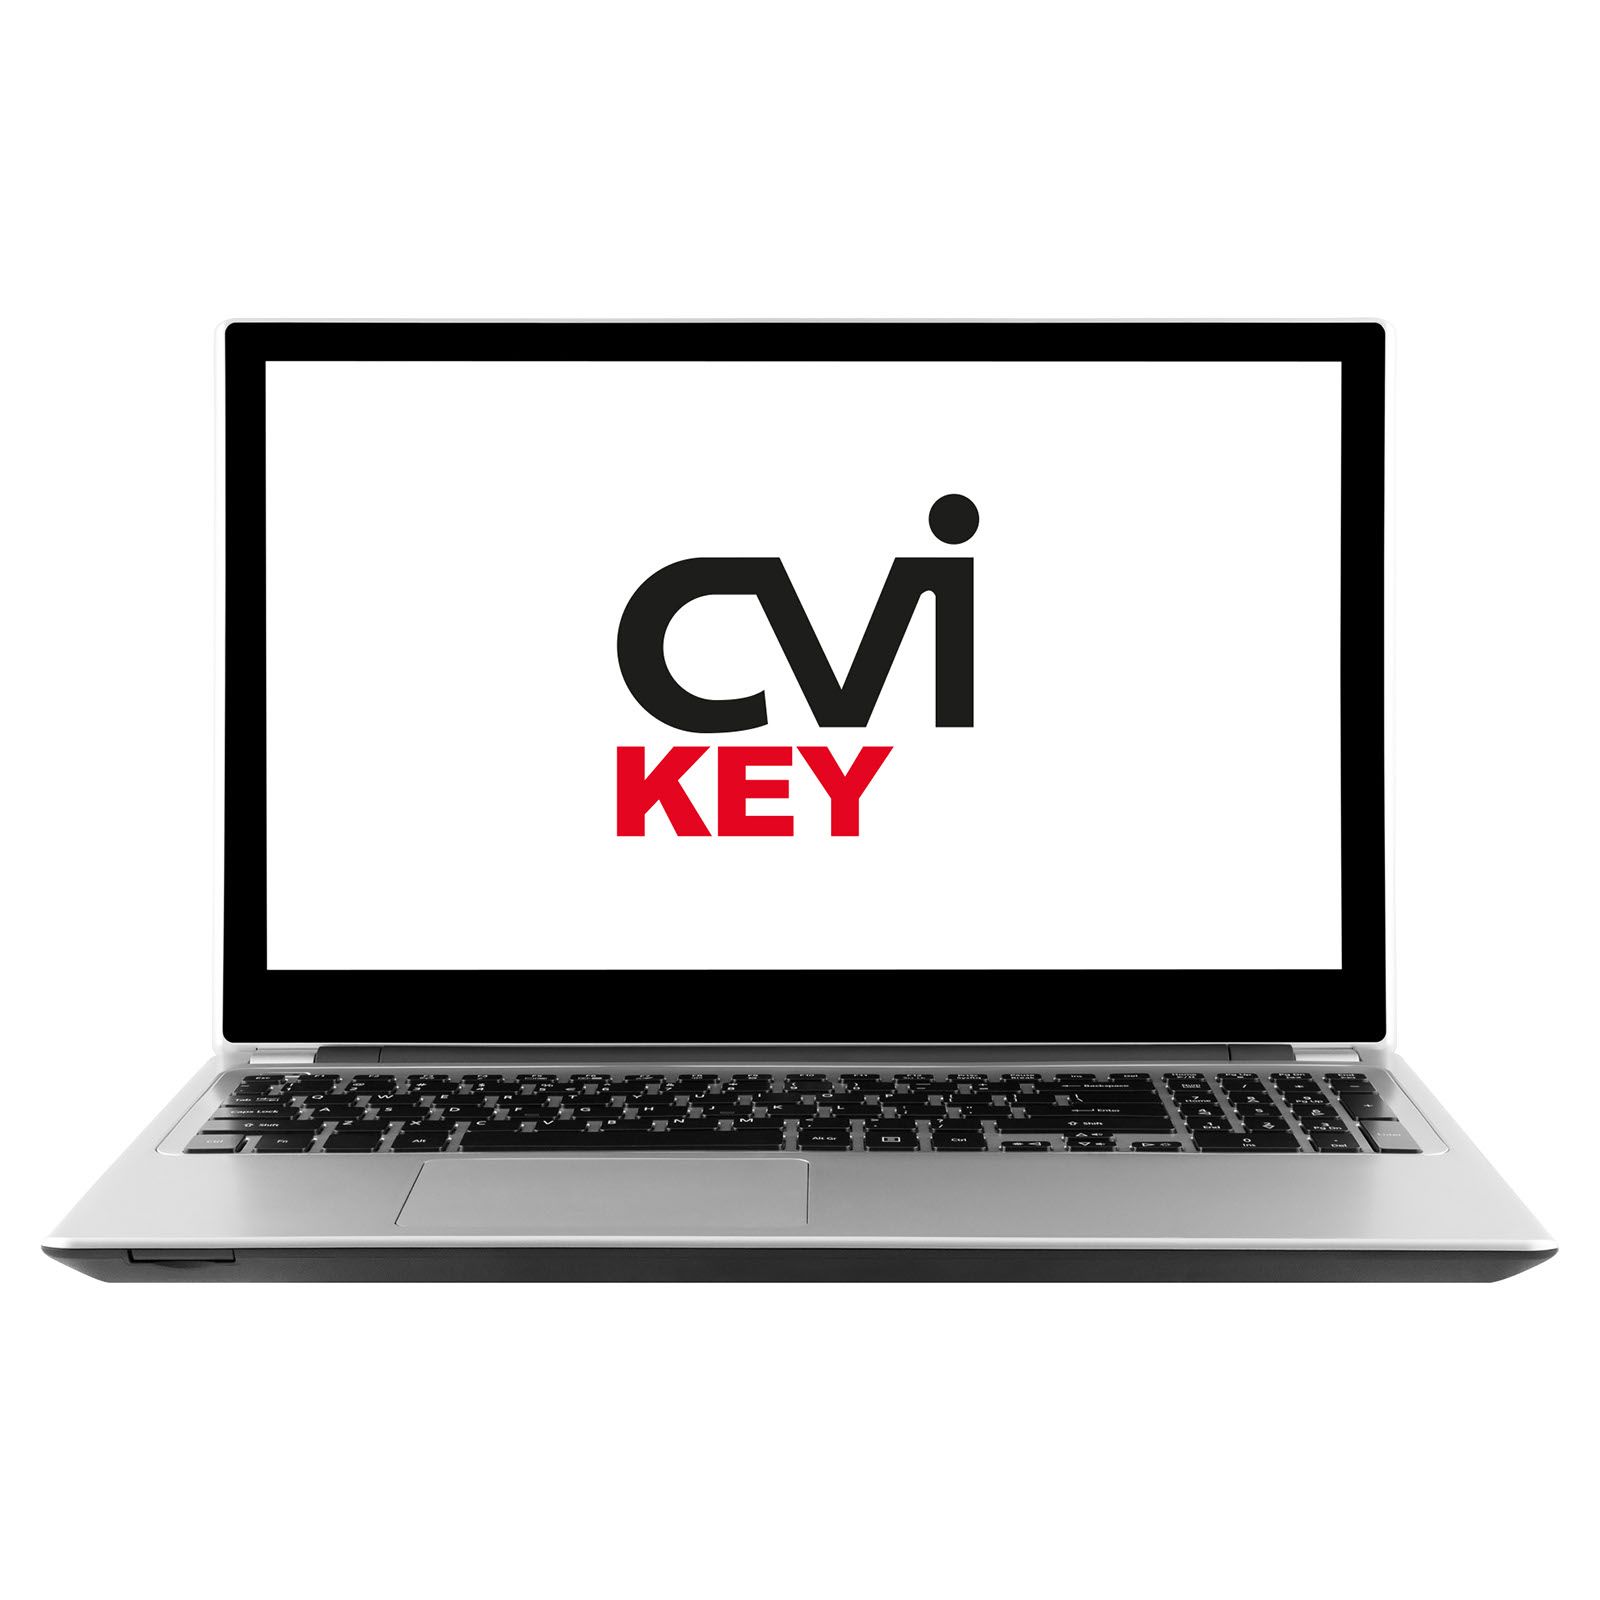 CVI KEY Software product photo